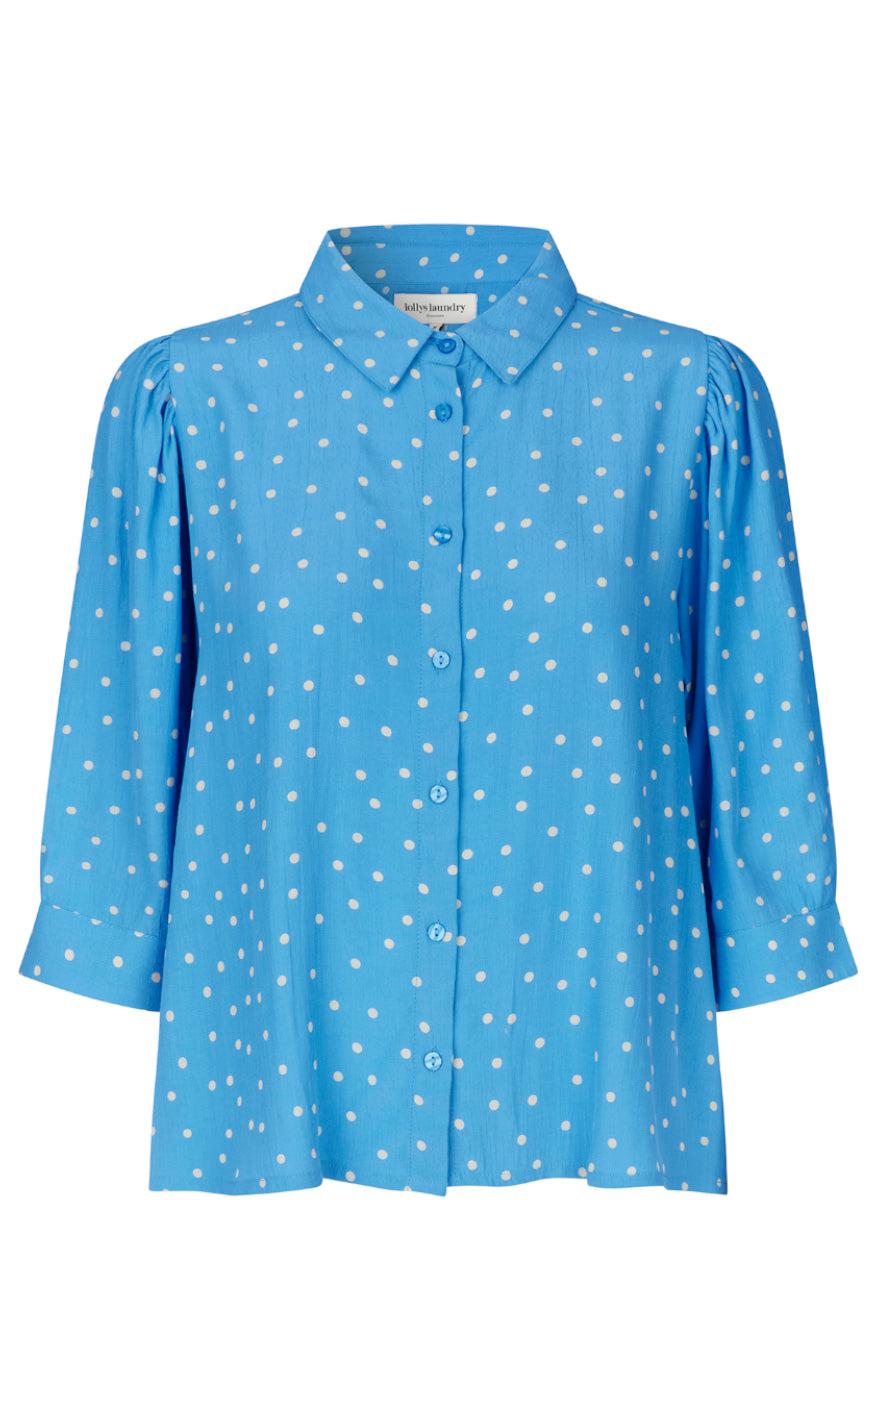 Se Lollys Laundry Skjorte - Bono - Dot Print hos Fashionbystrand